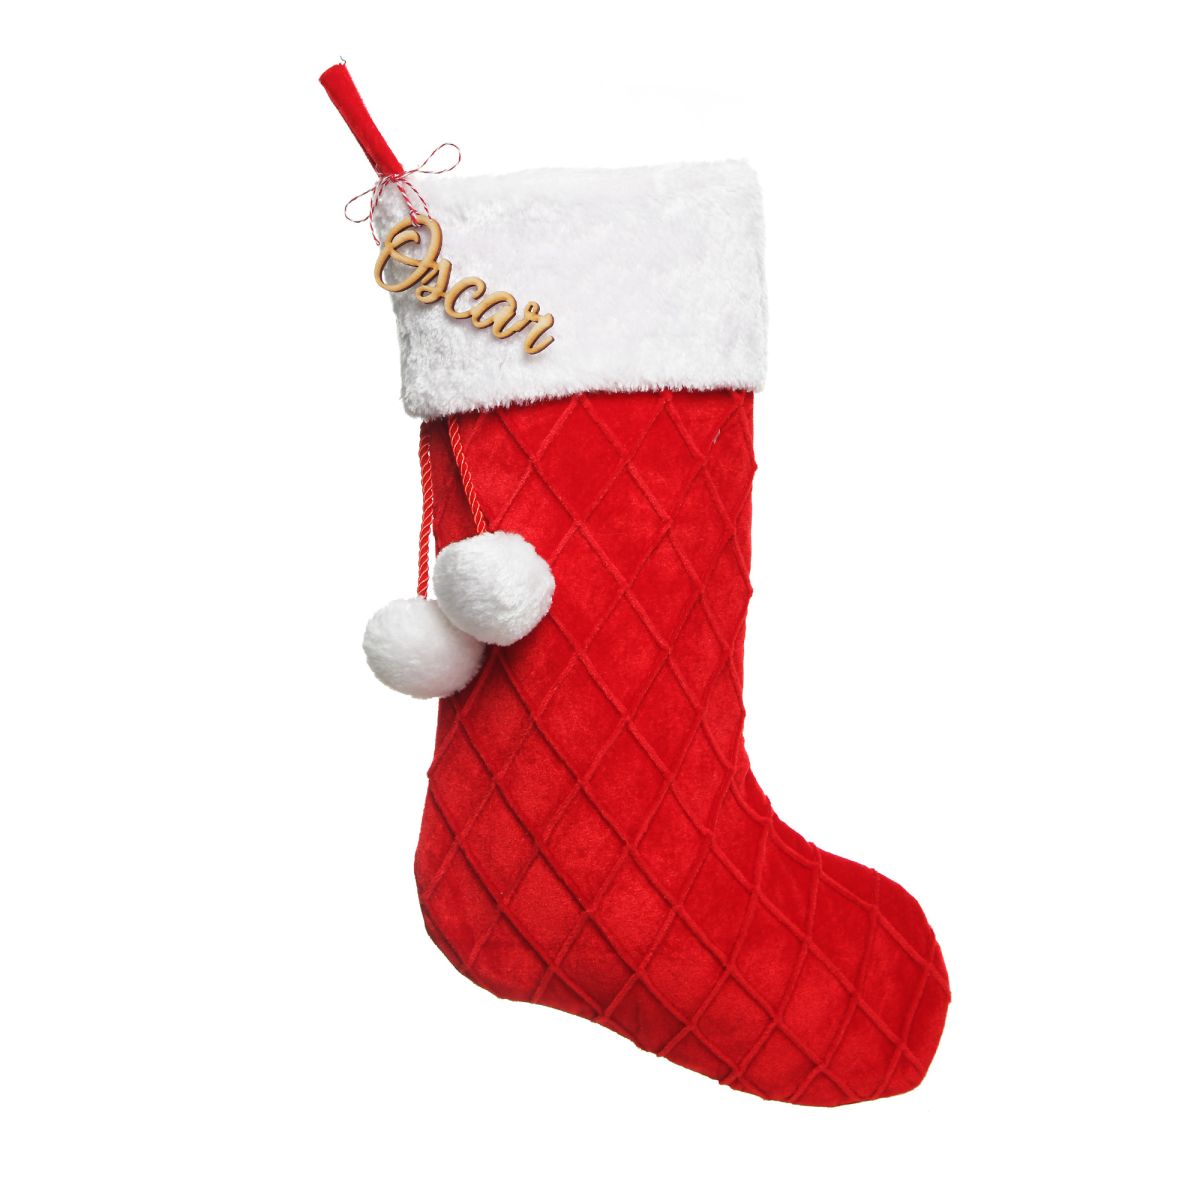 CLEARANCE Christmas Stockings, Pastel Christmas Stockings